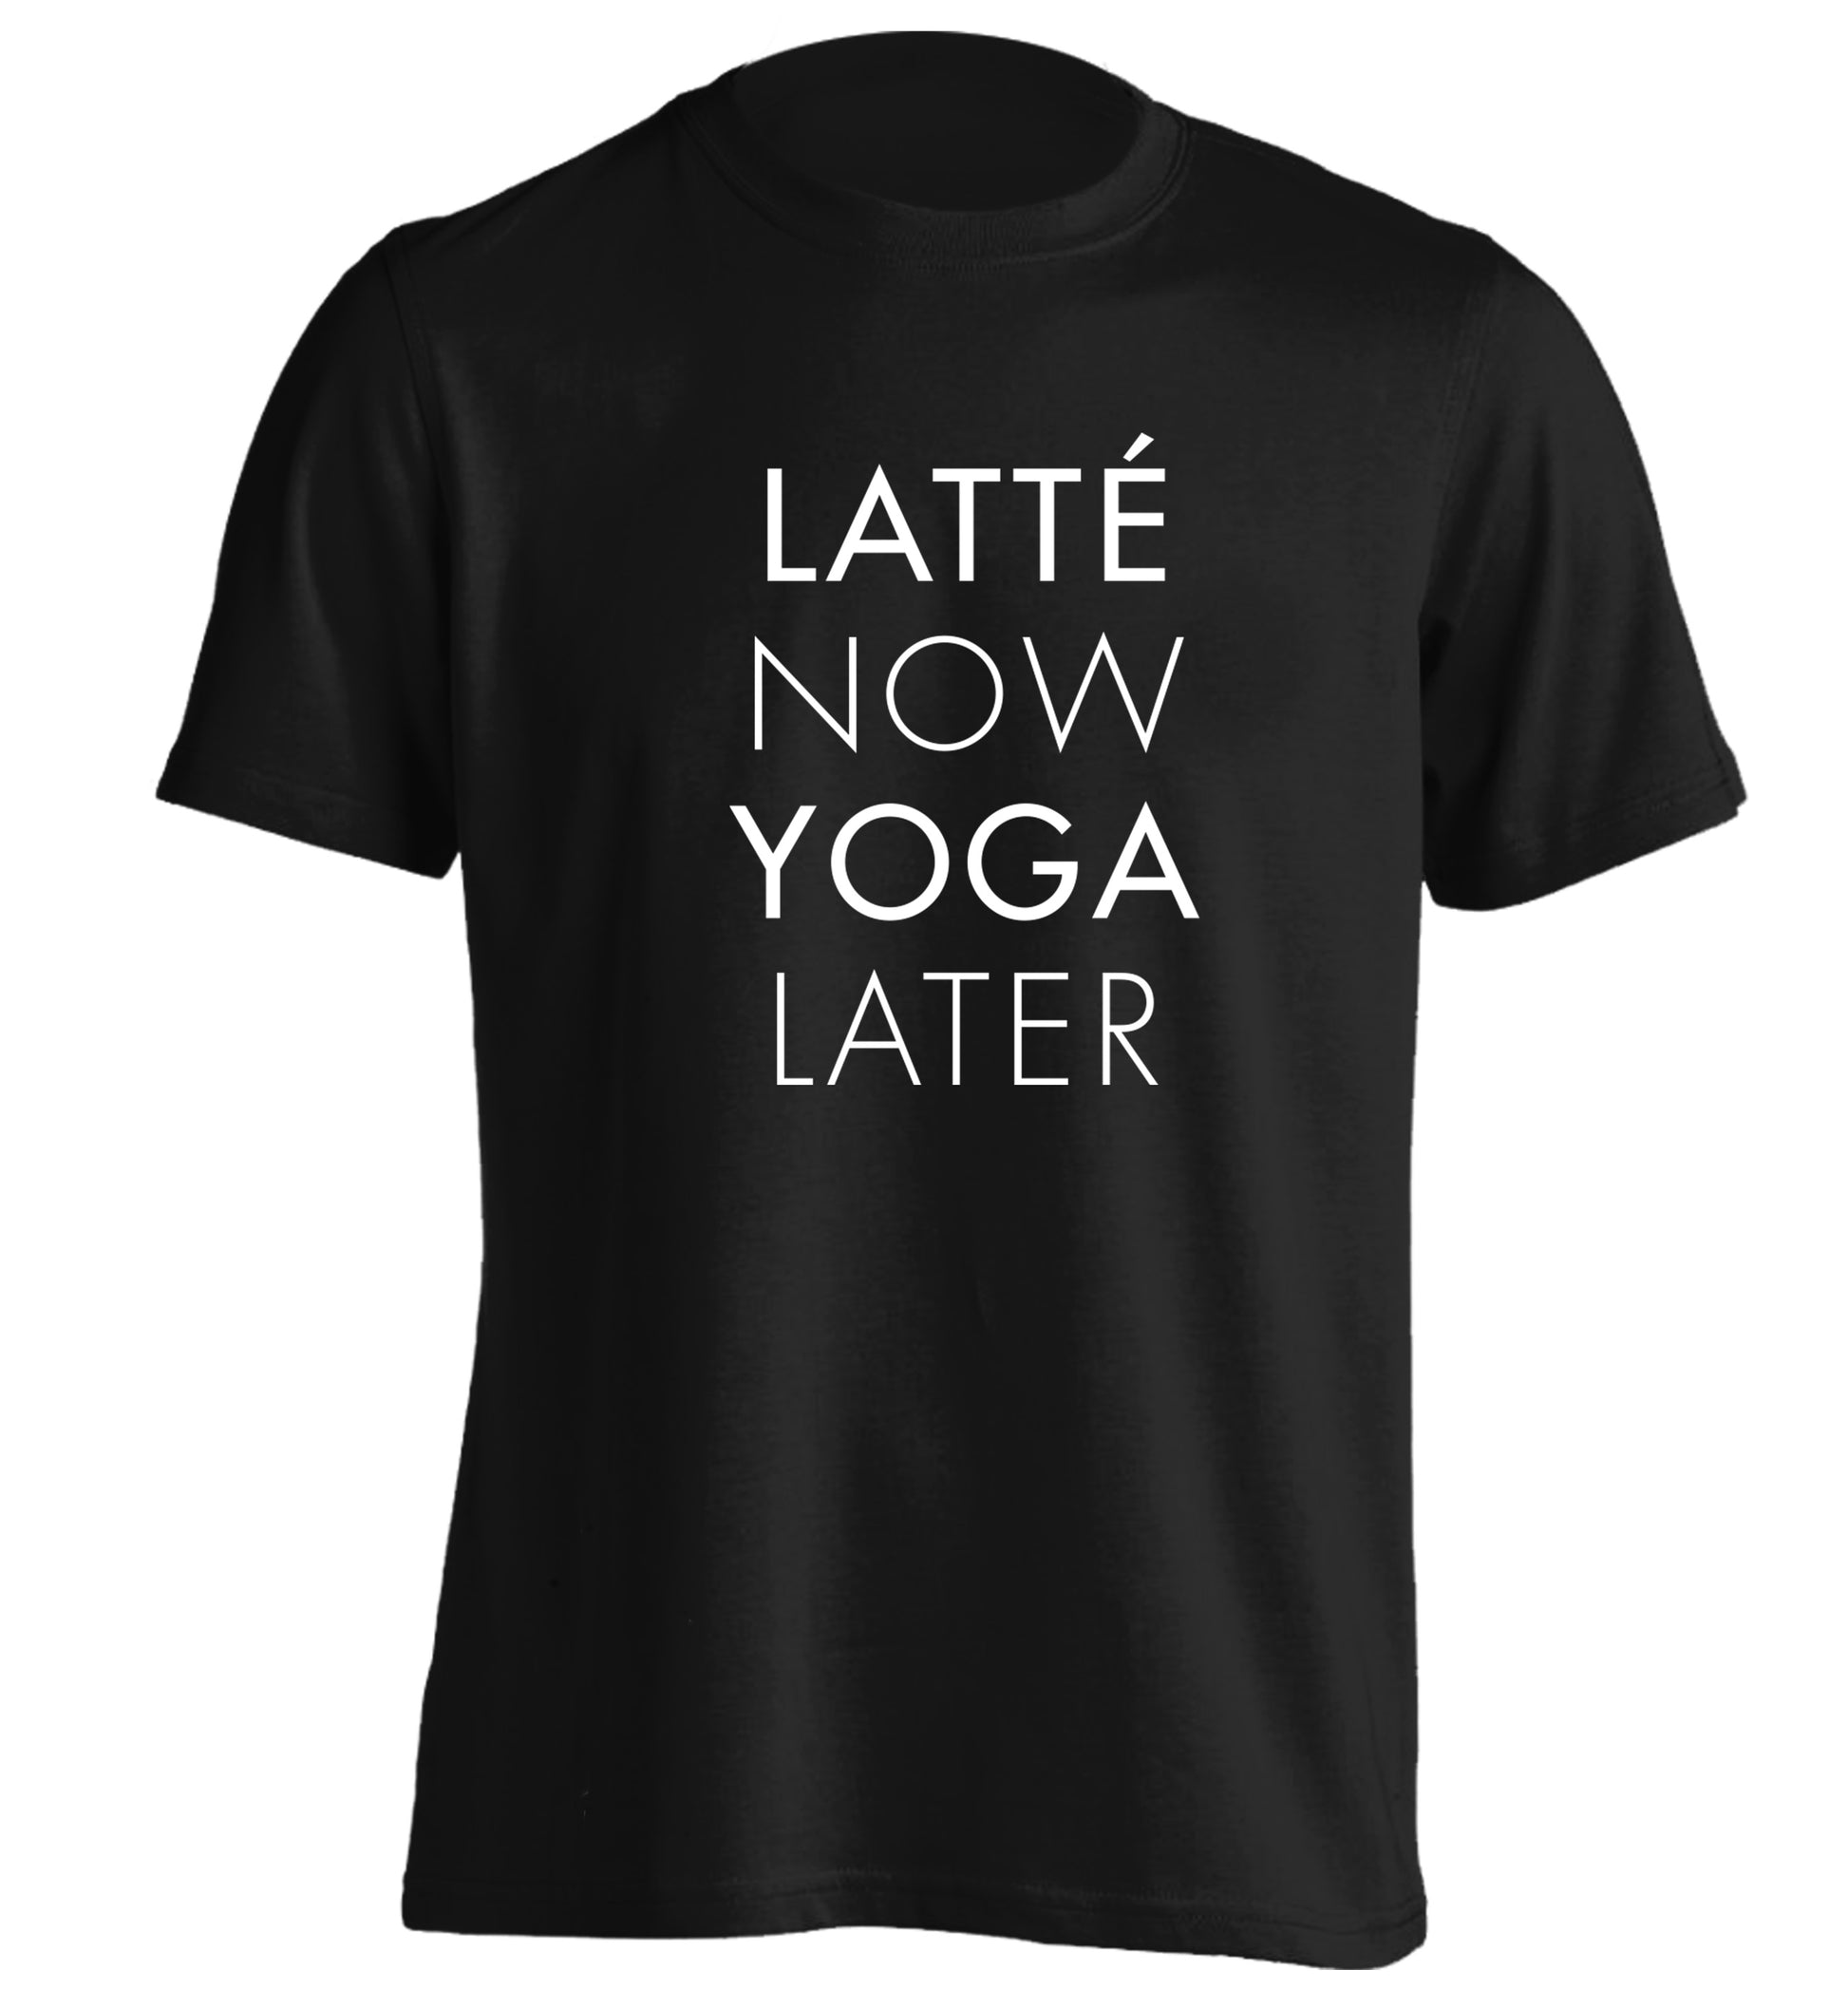 Latte now yoga later adults unisex black Tshirt 2XL